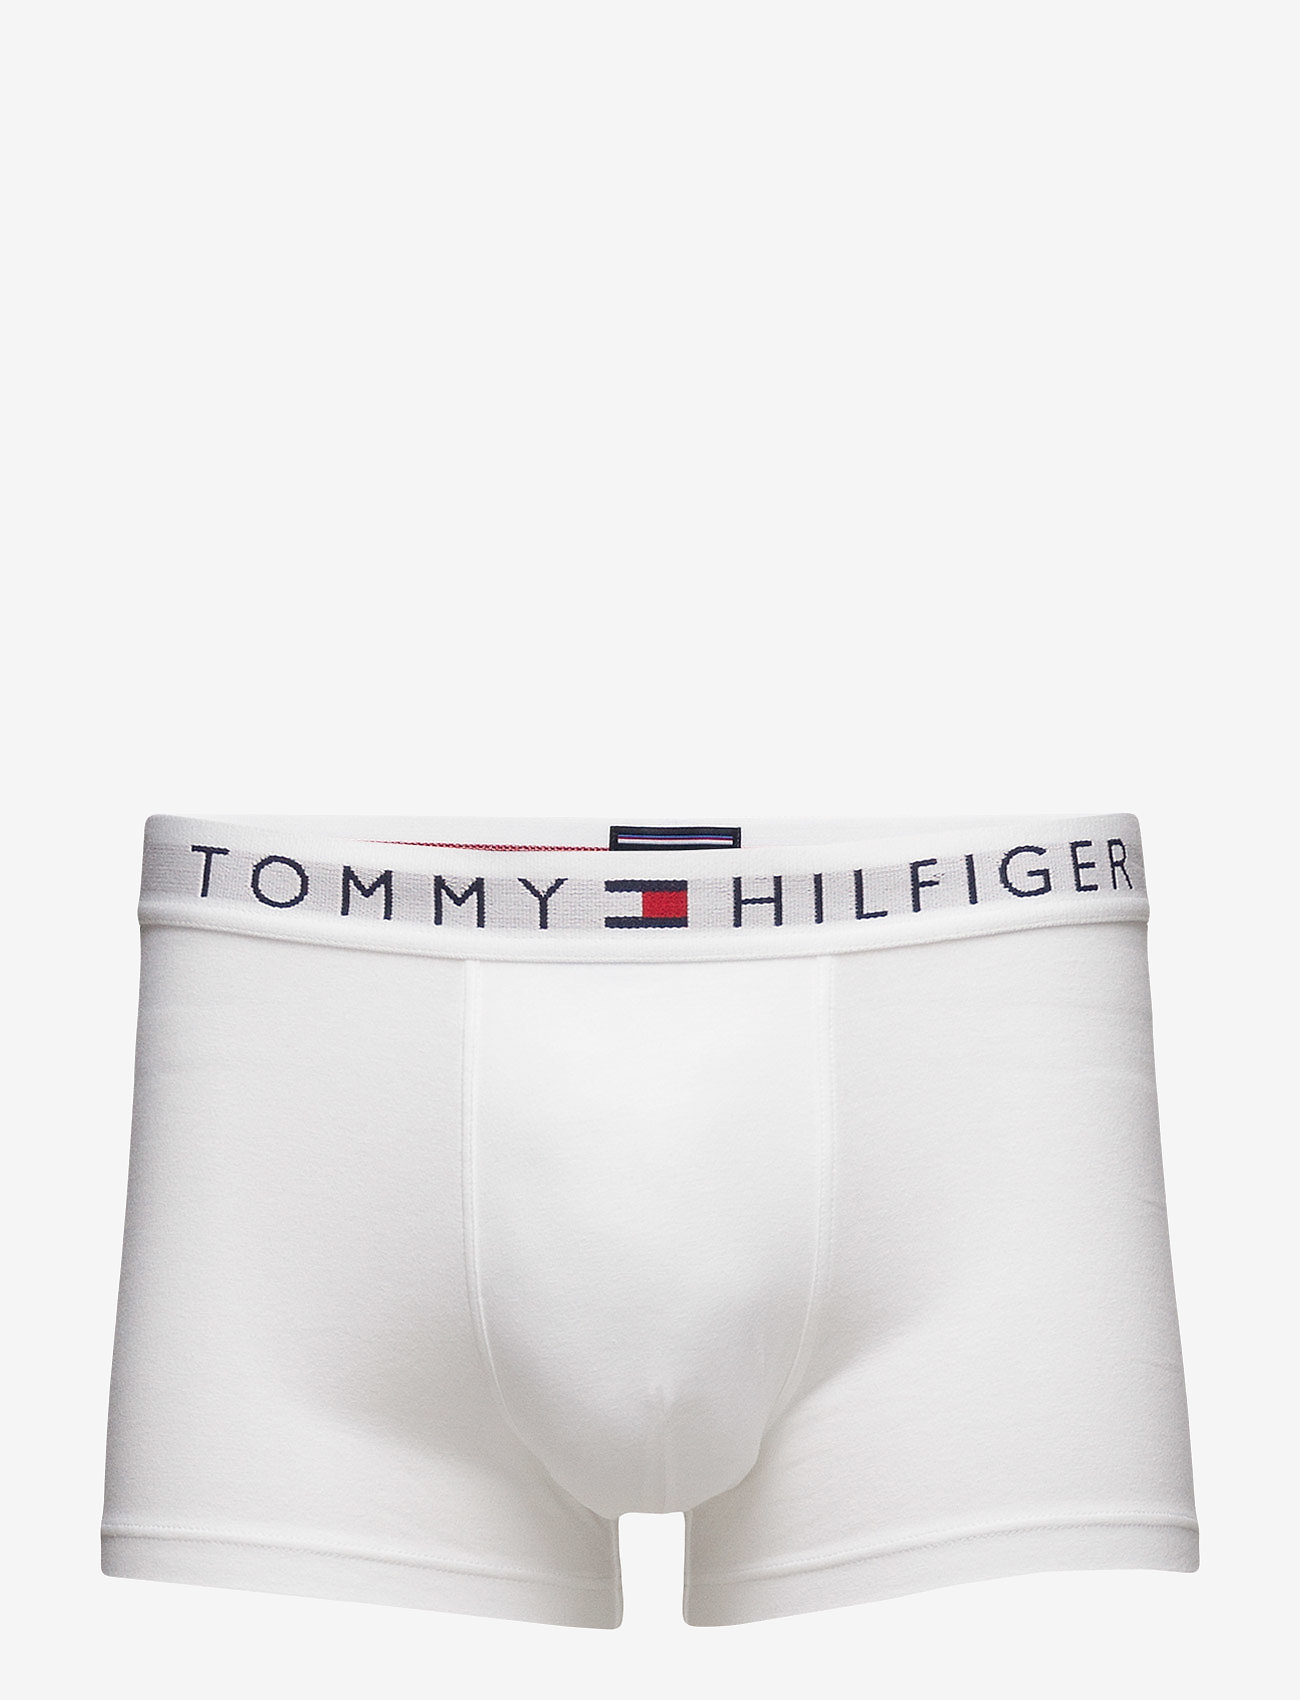 Tommy Hilfiger - Flag original stretch trunk - bright white - 0